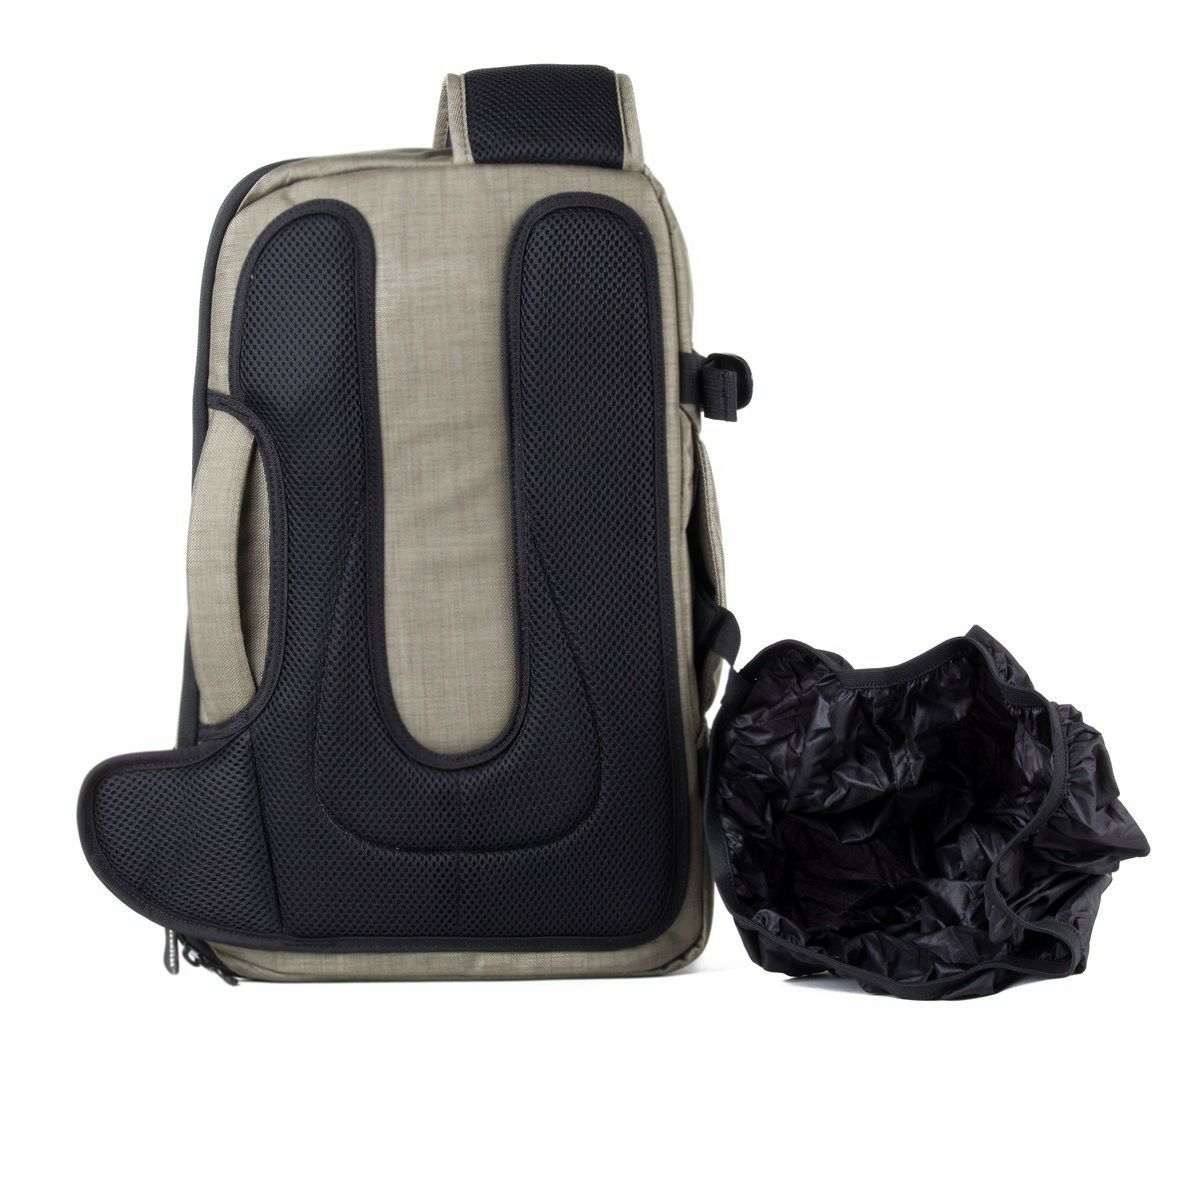 Crumpler Quick Escape Sling L - (Tablet) dusty kahki (QES-L-007) bež torba za fotoaparat